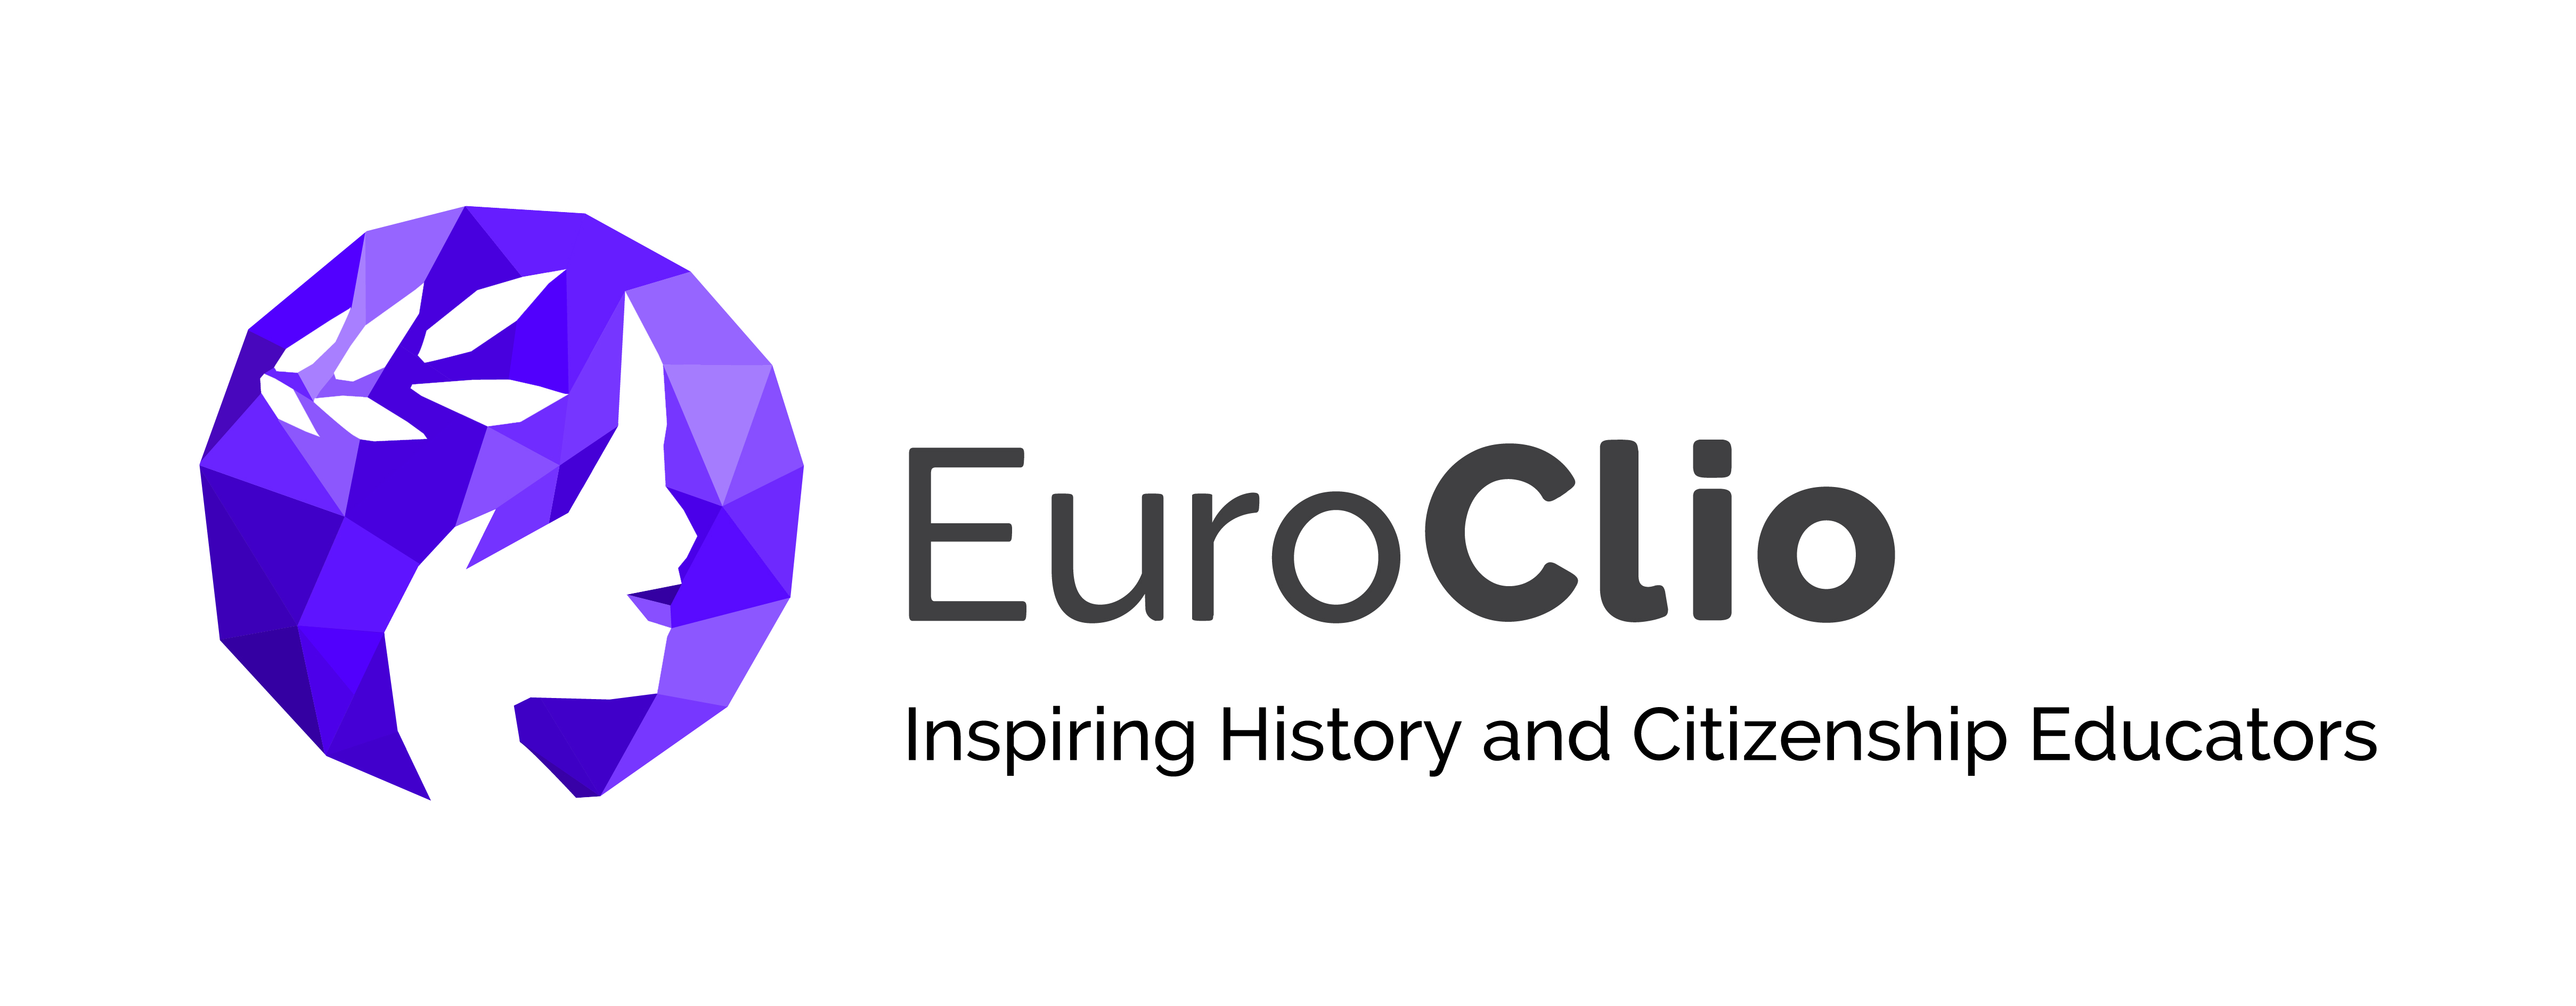 EuroClio logo landscape black type